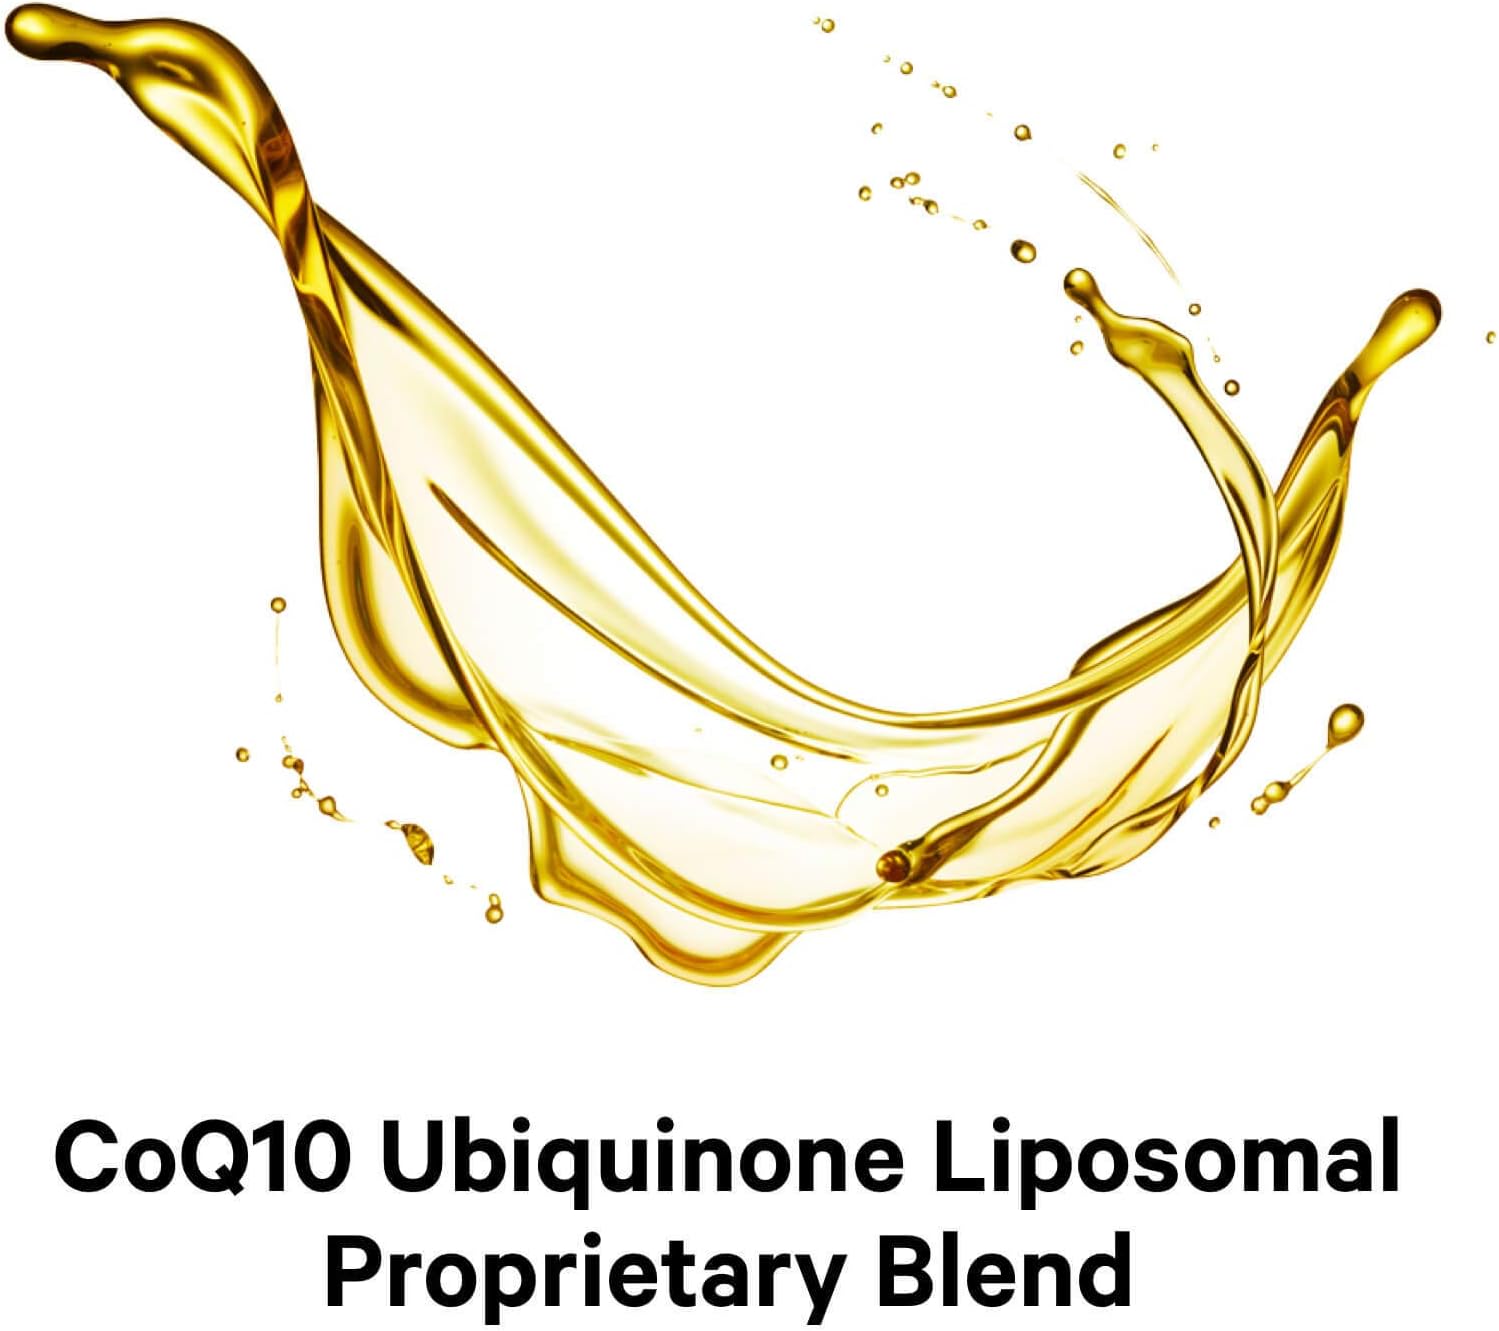 Codeage Wonder Heart Liquid CoQ10 Liposomal Ubiquinone Supplement, Coe